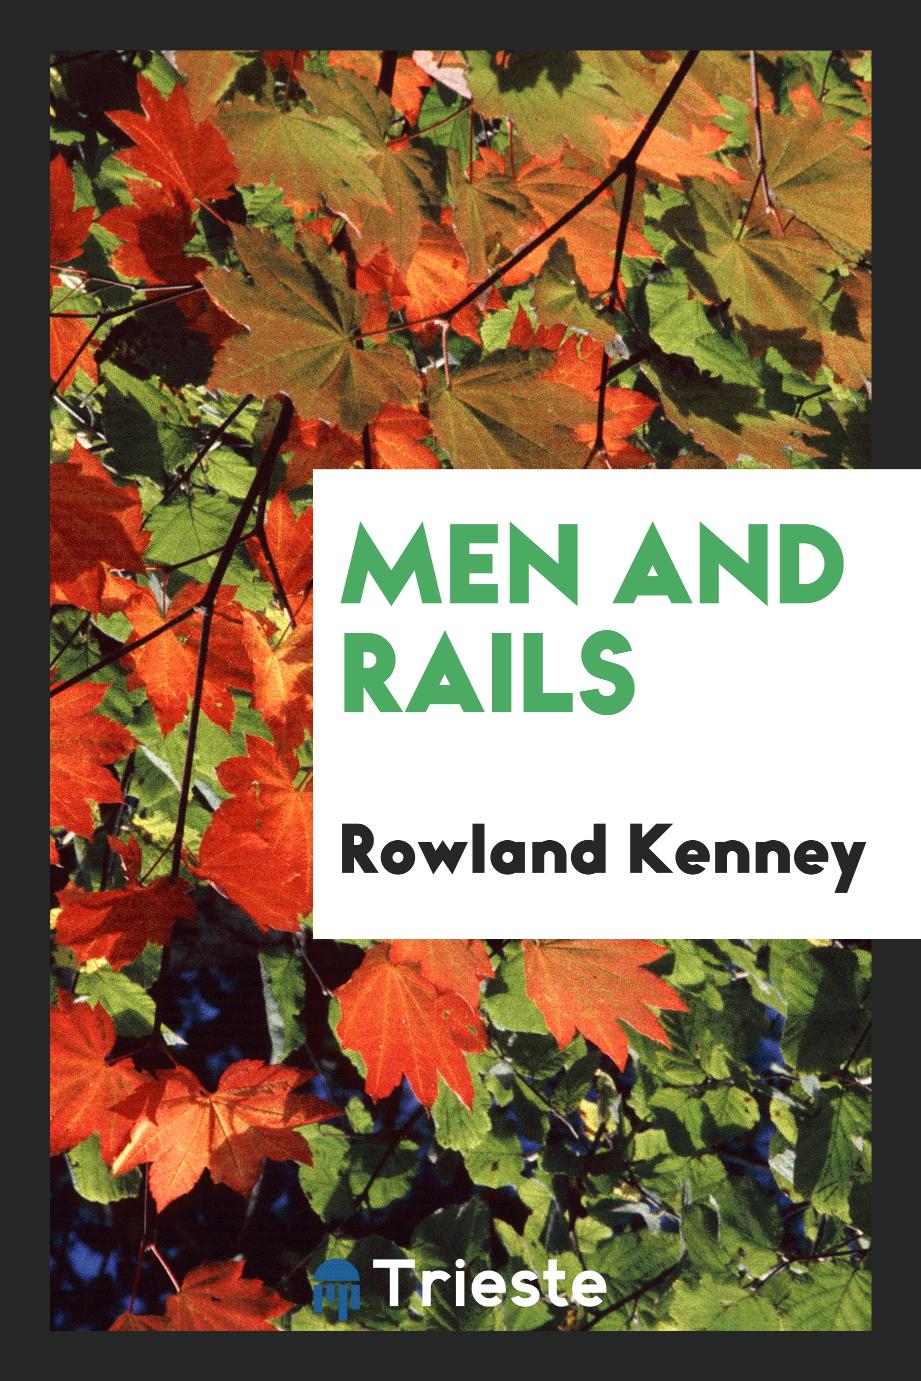 Men and rails